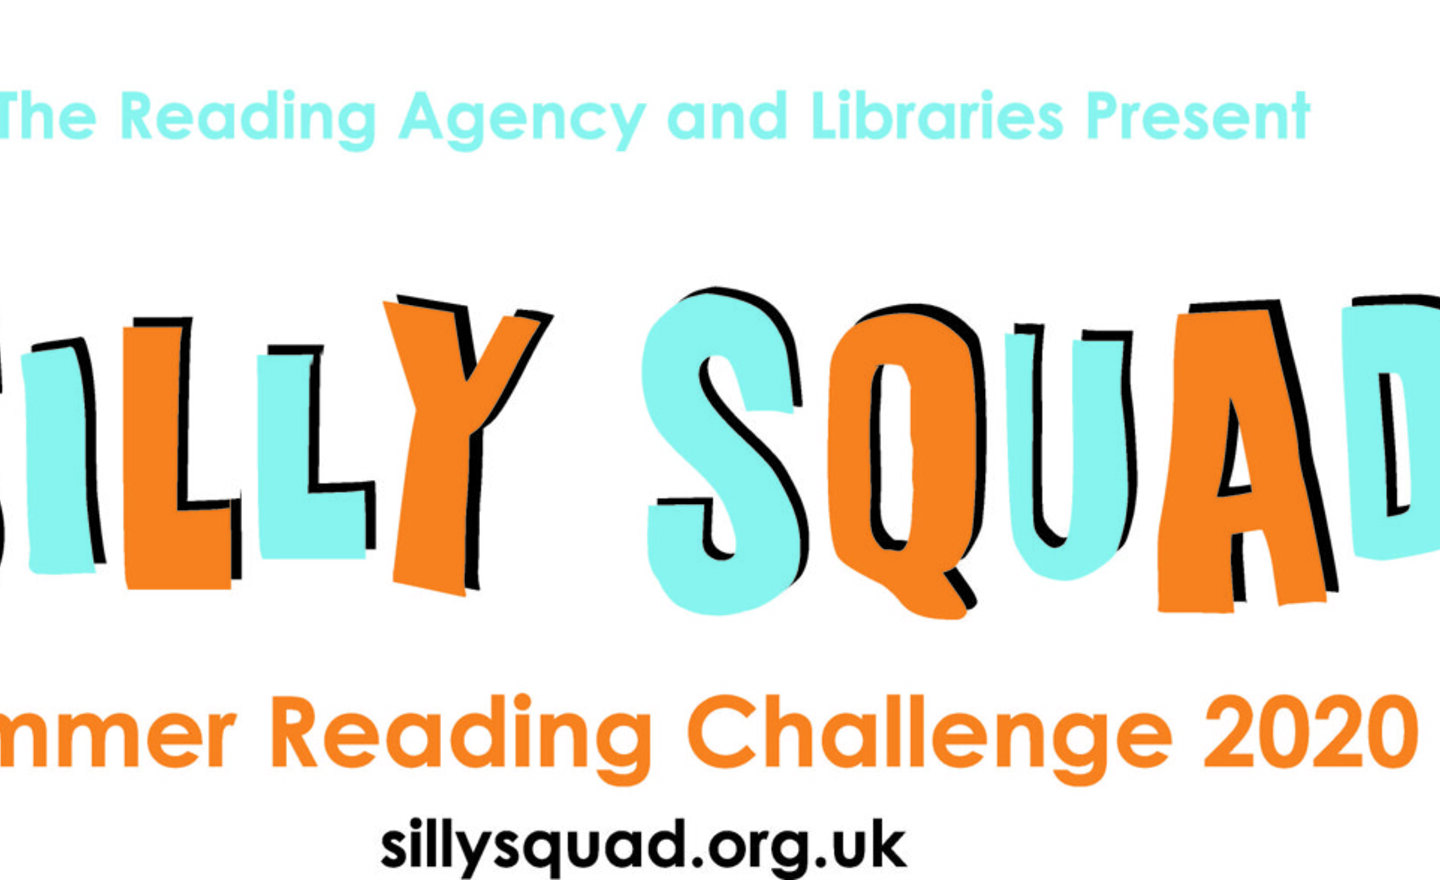 Image of Reading challenge